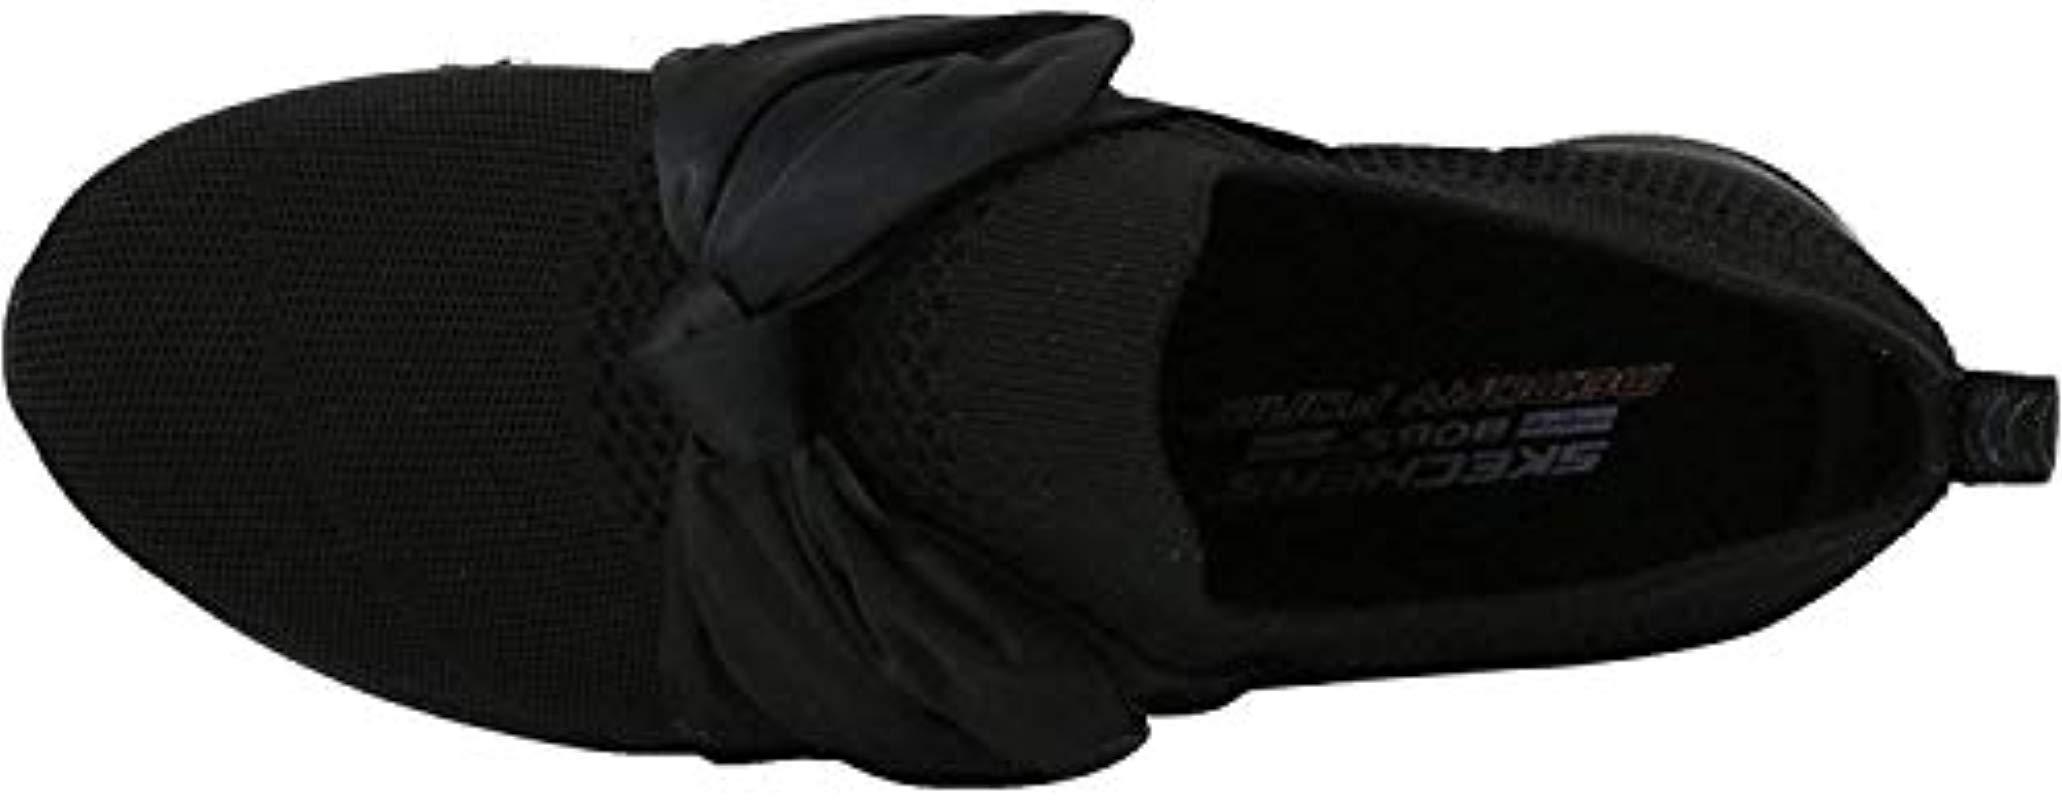 Skechers Bobs Bobs Squad 2-bow Overlay Slip On Engineered Knit Sneaker W  Memory Foam, Bbk, 6 M Us in Black | Lyst